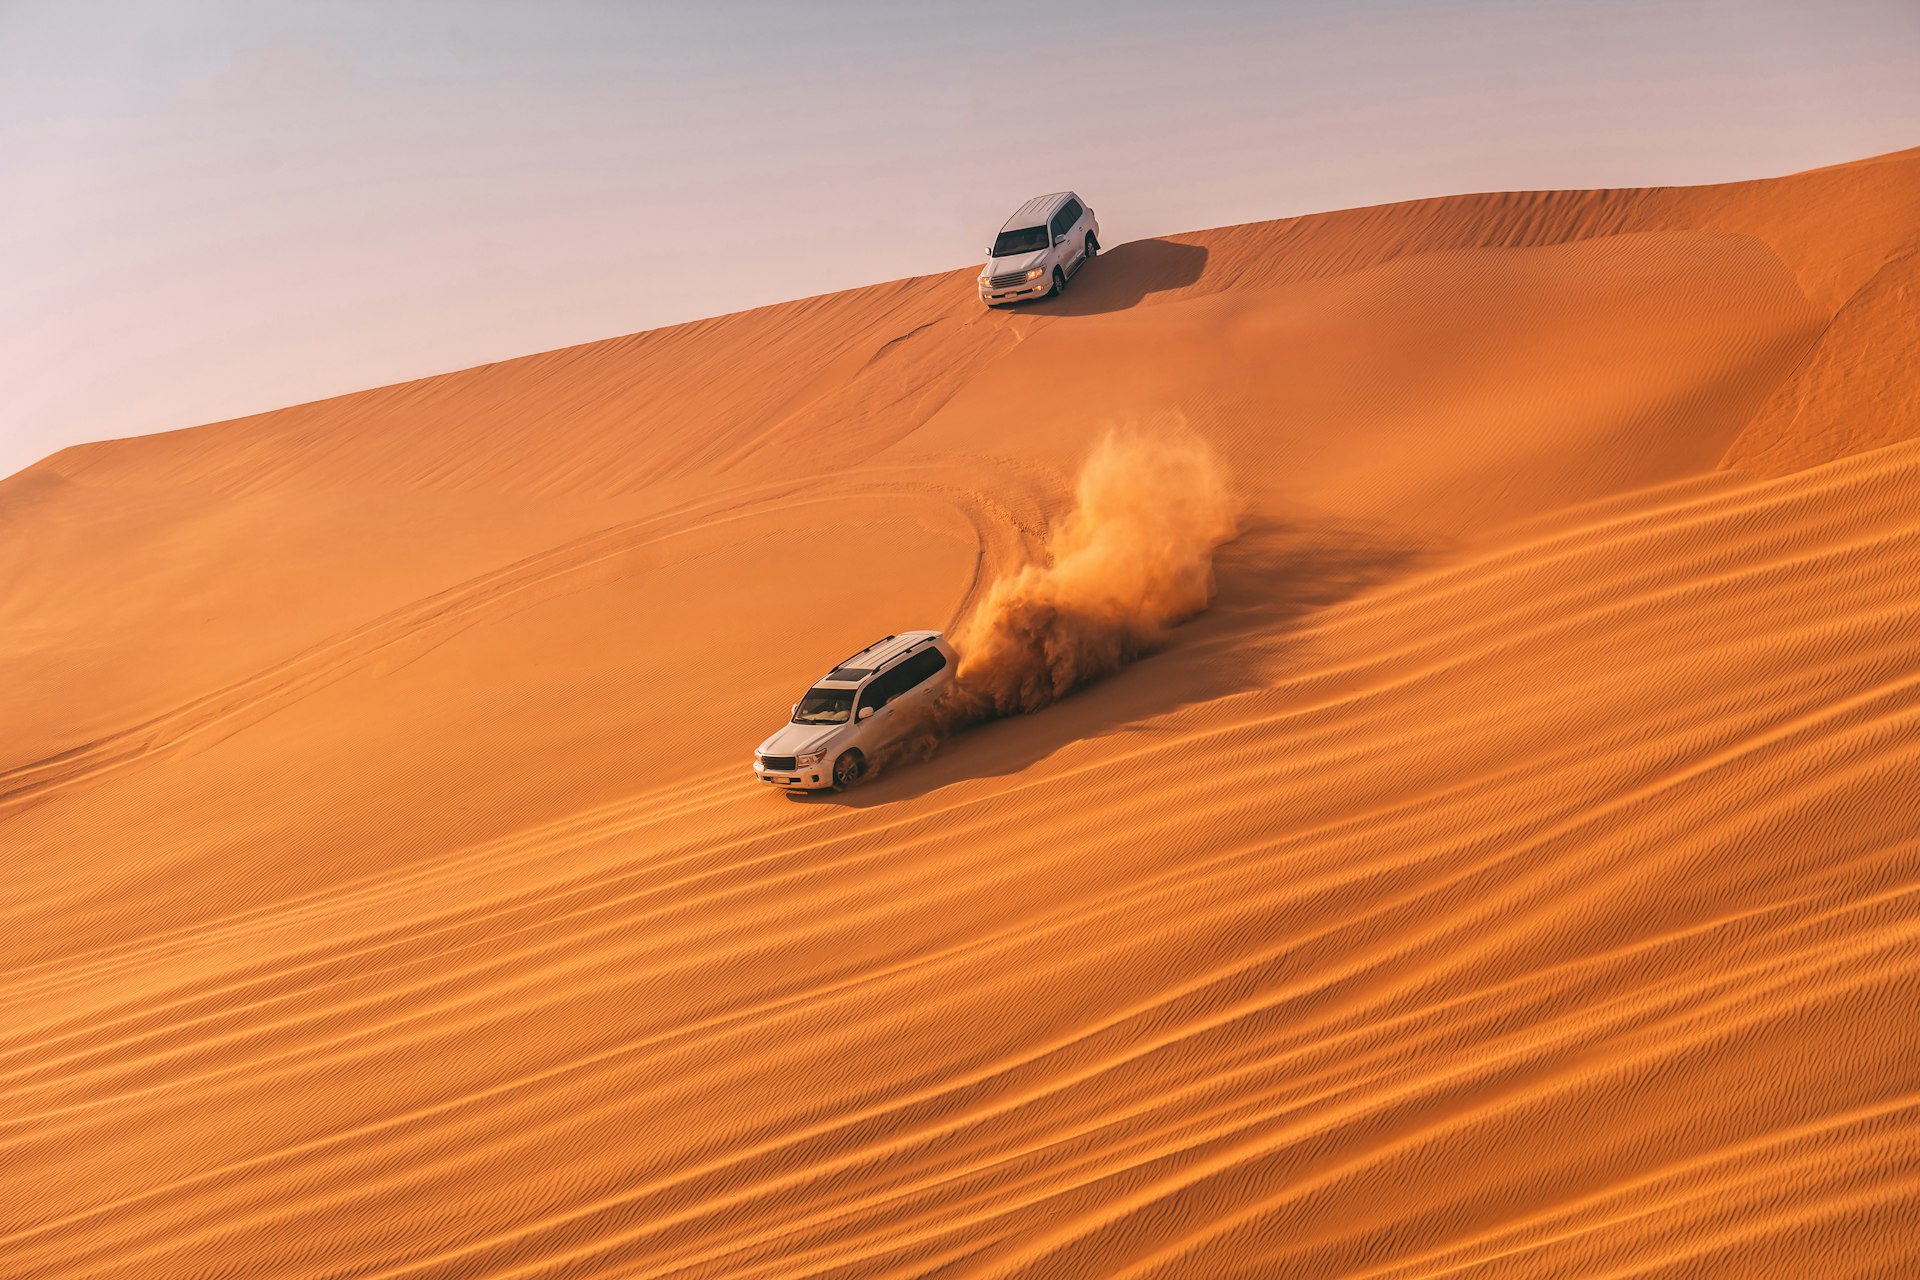 Dune bashing with a 4x4 jeep, Al-Khatim Desert, Dubai, United Arab Emirates